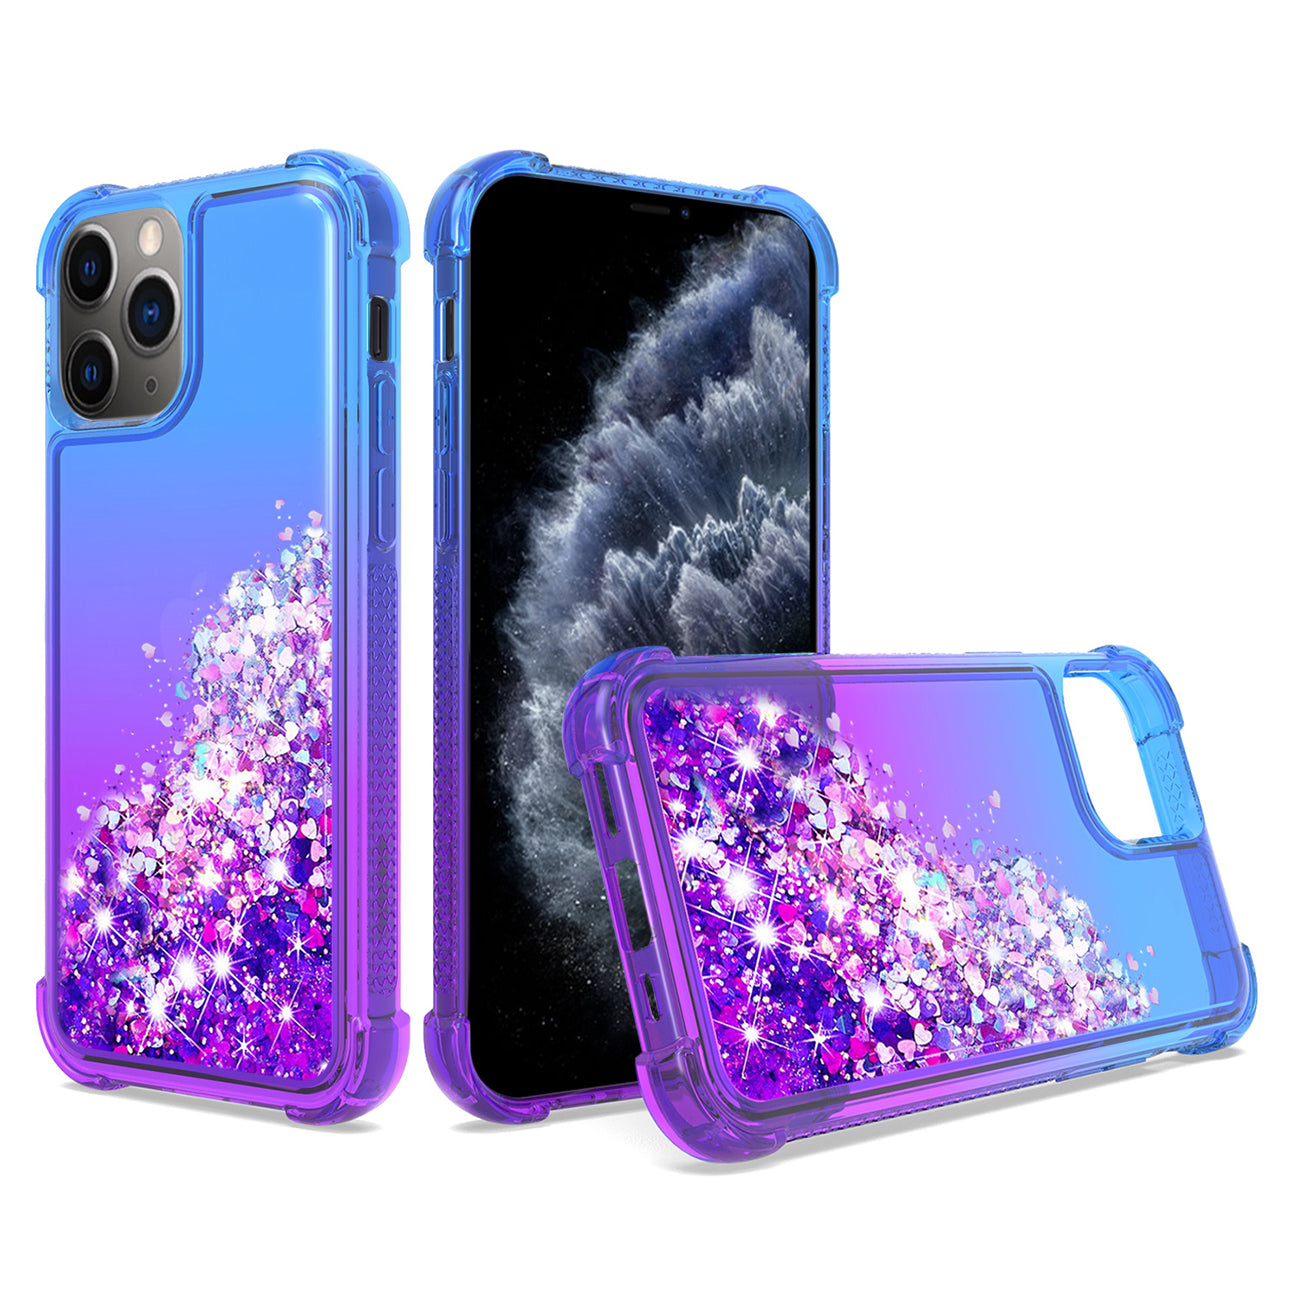 Case Bumper Shiny Flowing Glitter Liquid Apple iPhone 11 Pro Max Blue Color